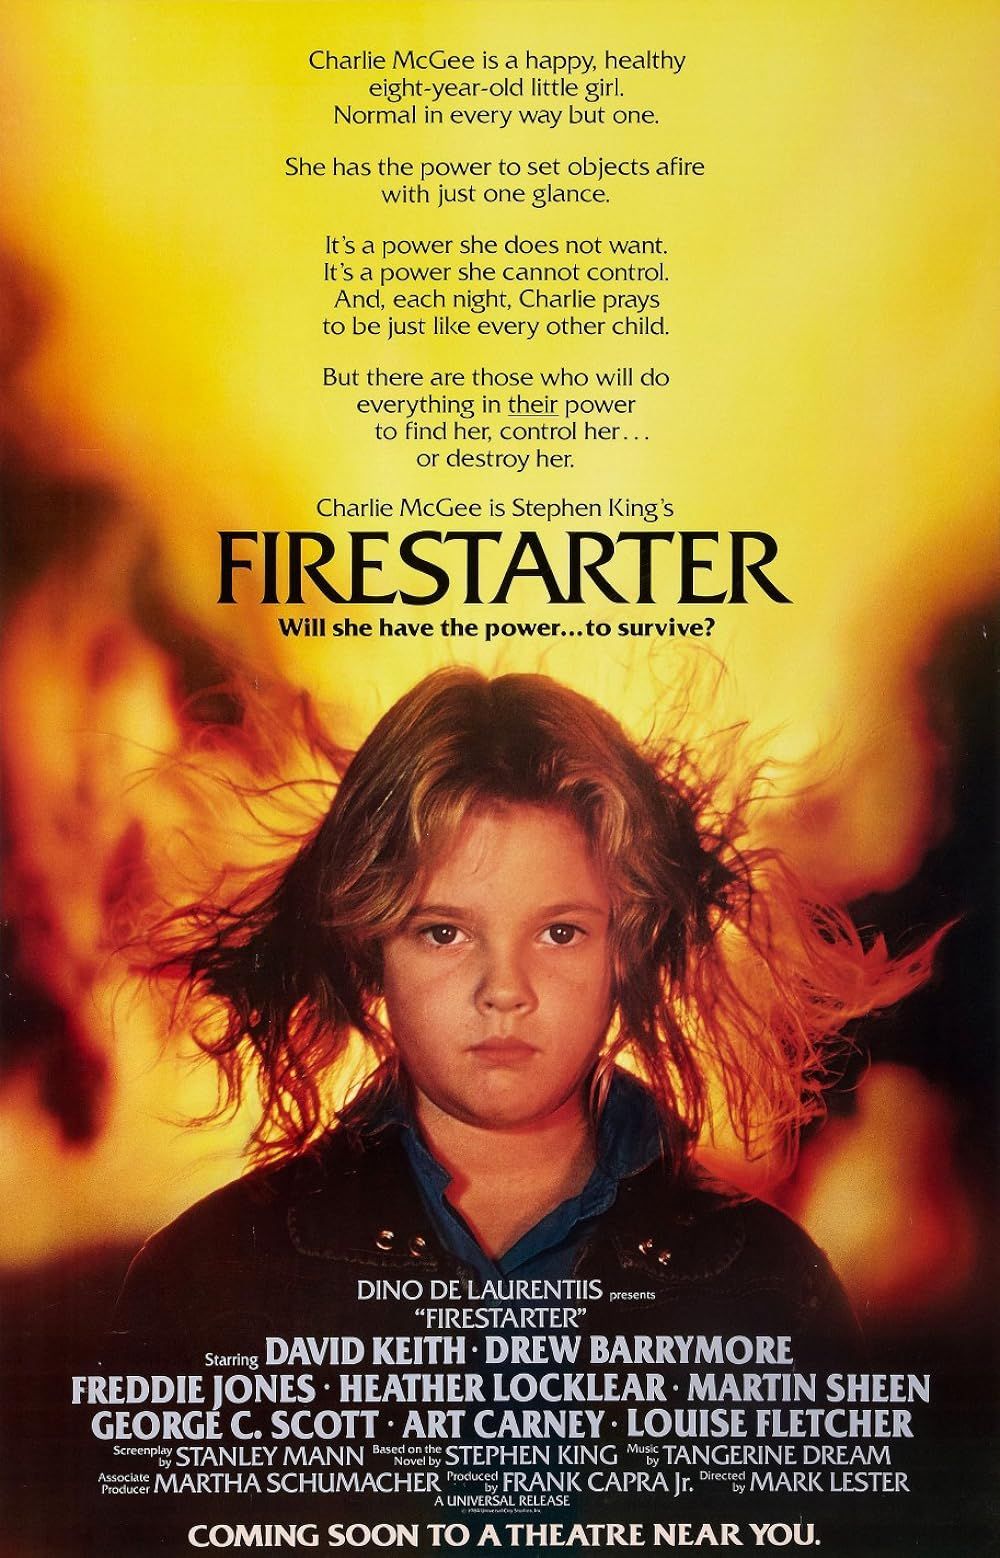 Drew Barrymore as Charlie on the poster of Firestarter